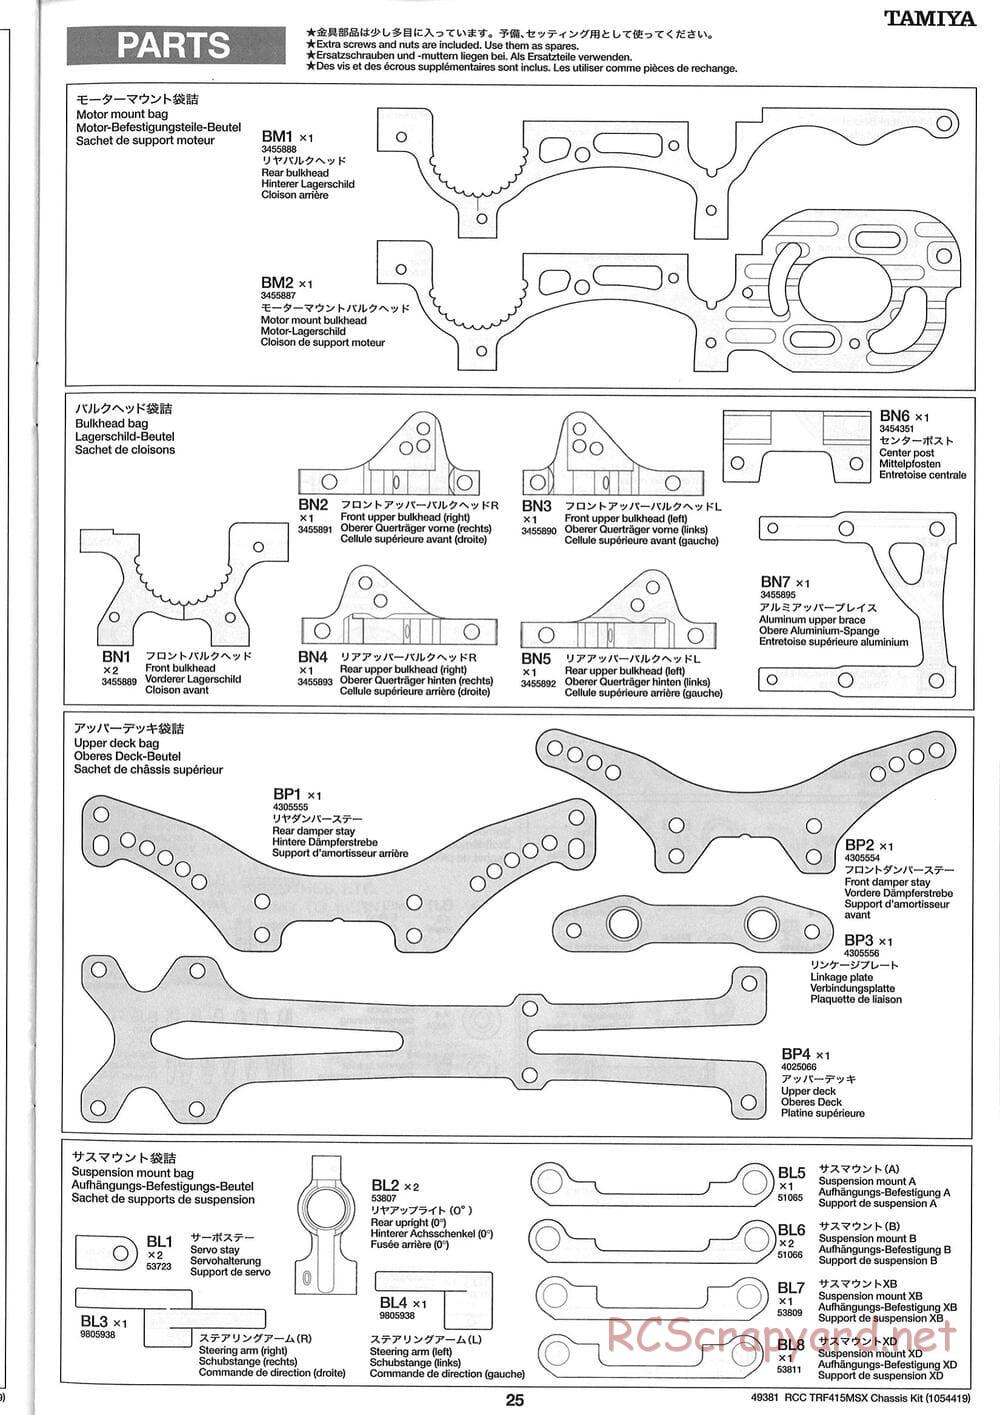 Tamiya - TRF415-MSX Chassis - Manual - Page 25